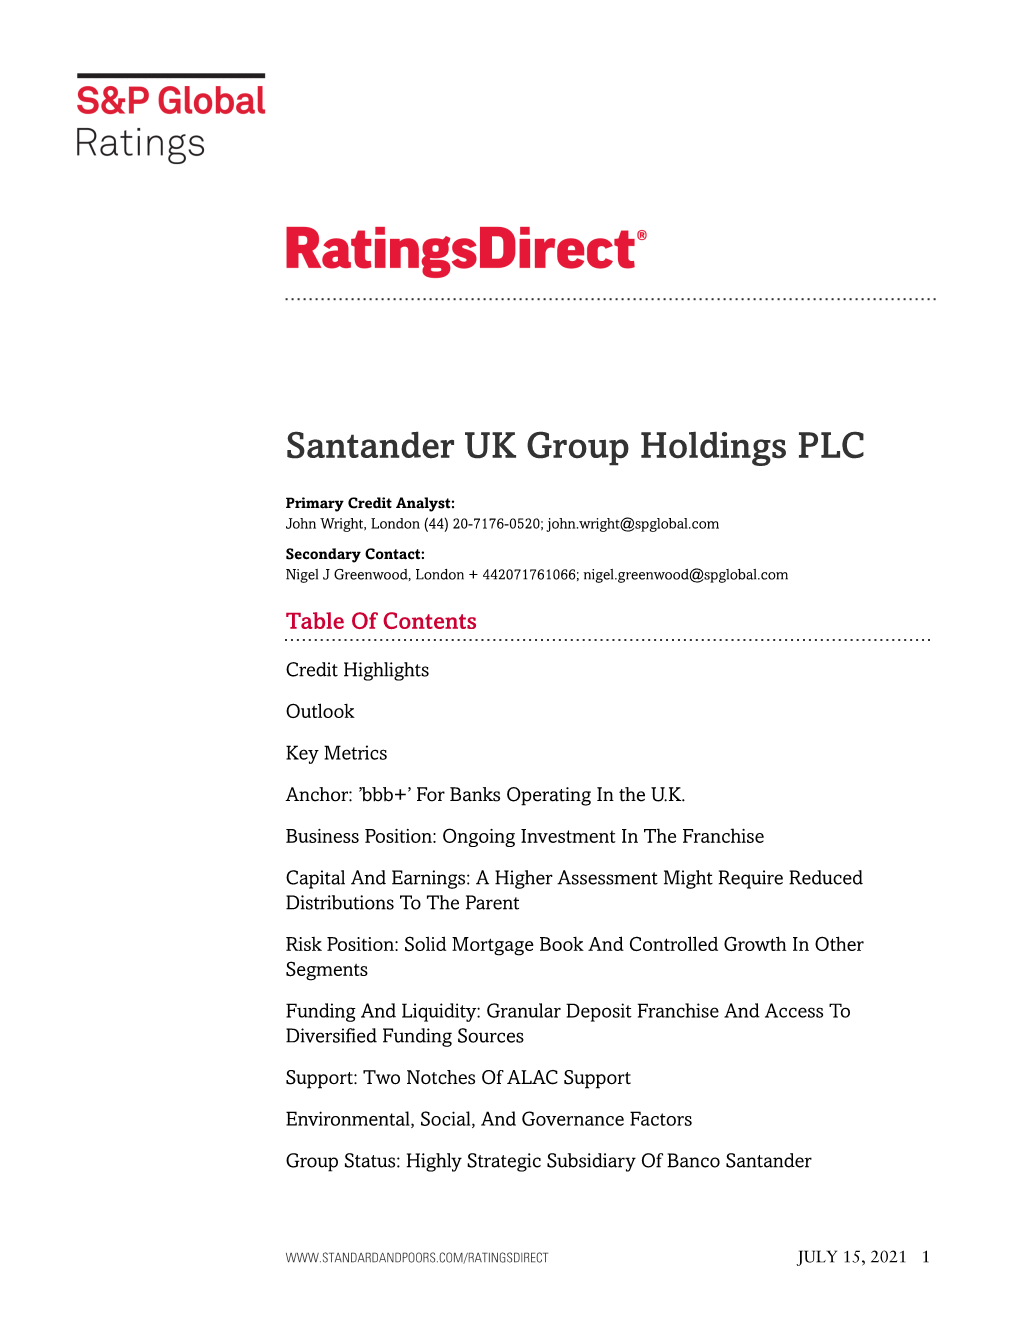 Santander UK Group Holdings PLC